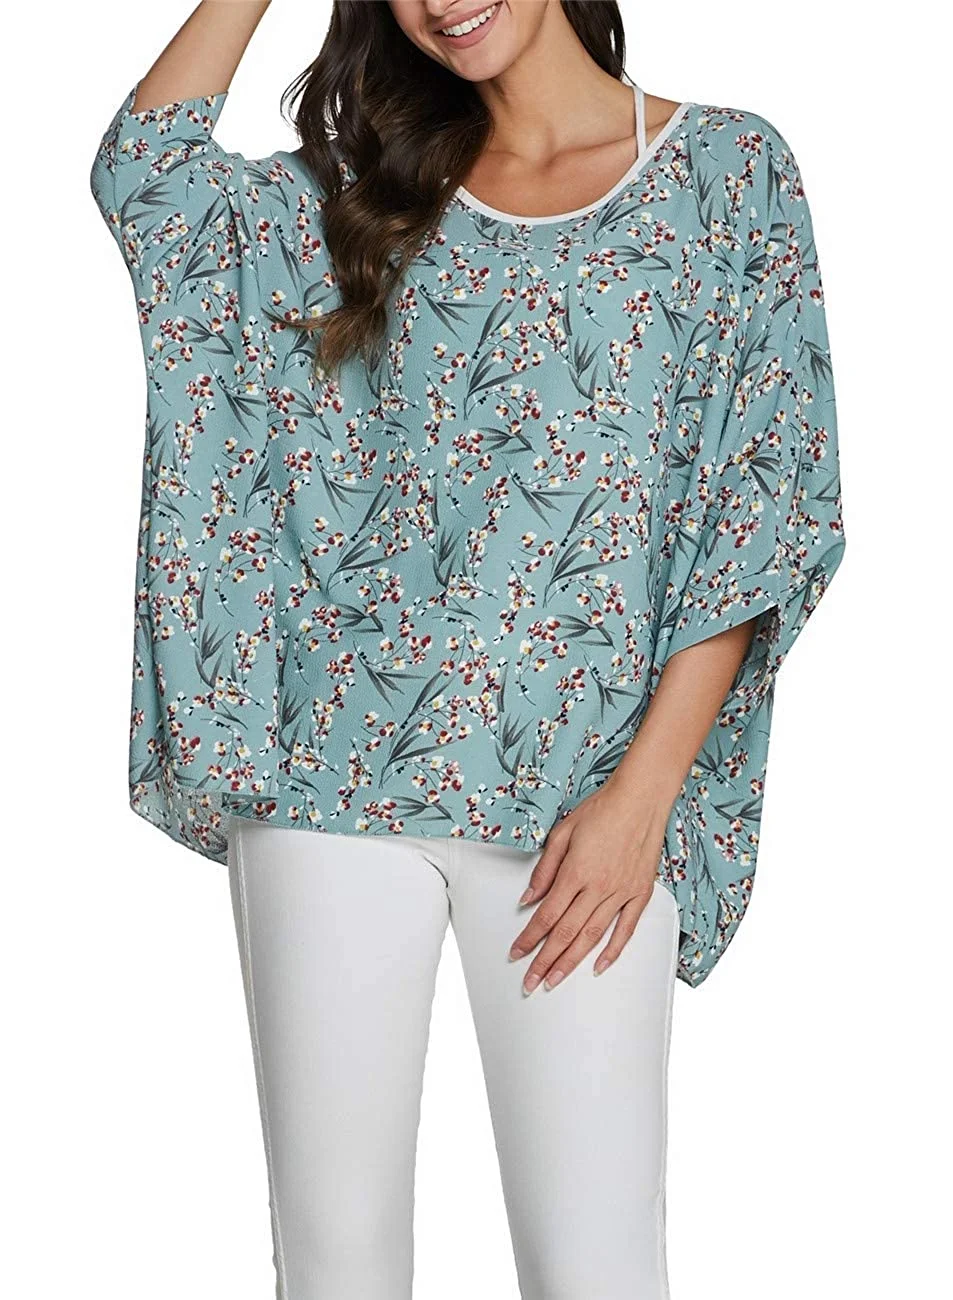 2020 New Pattern Womens Floral Print Batwing Top Chiffon Poncho Summer Casual Loose Sheer Shirt Blouse Tunics